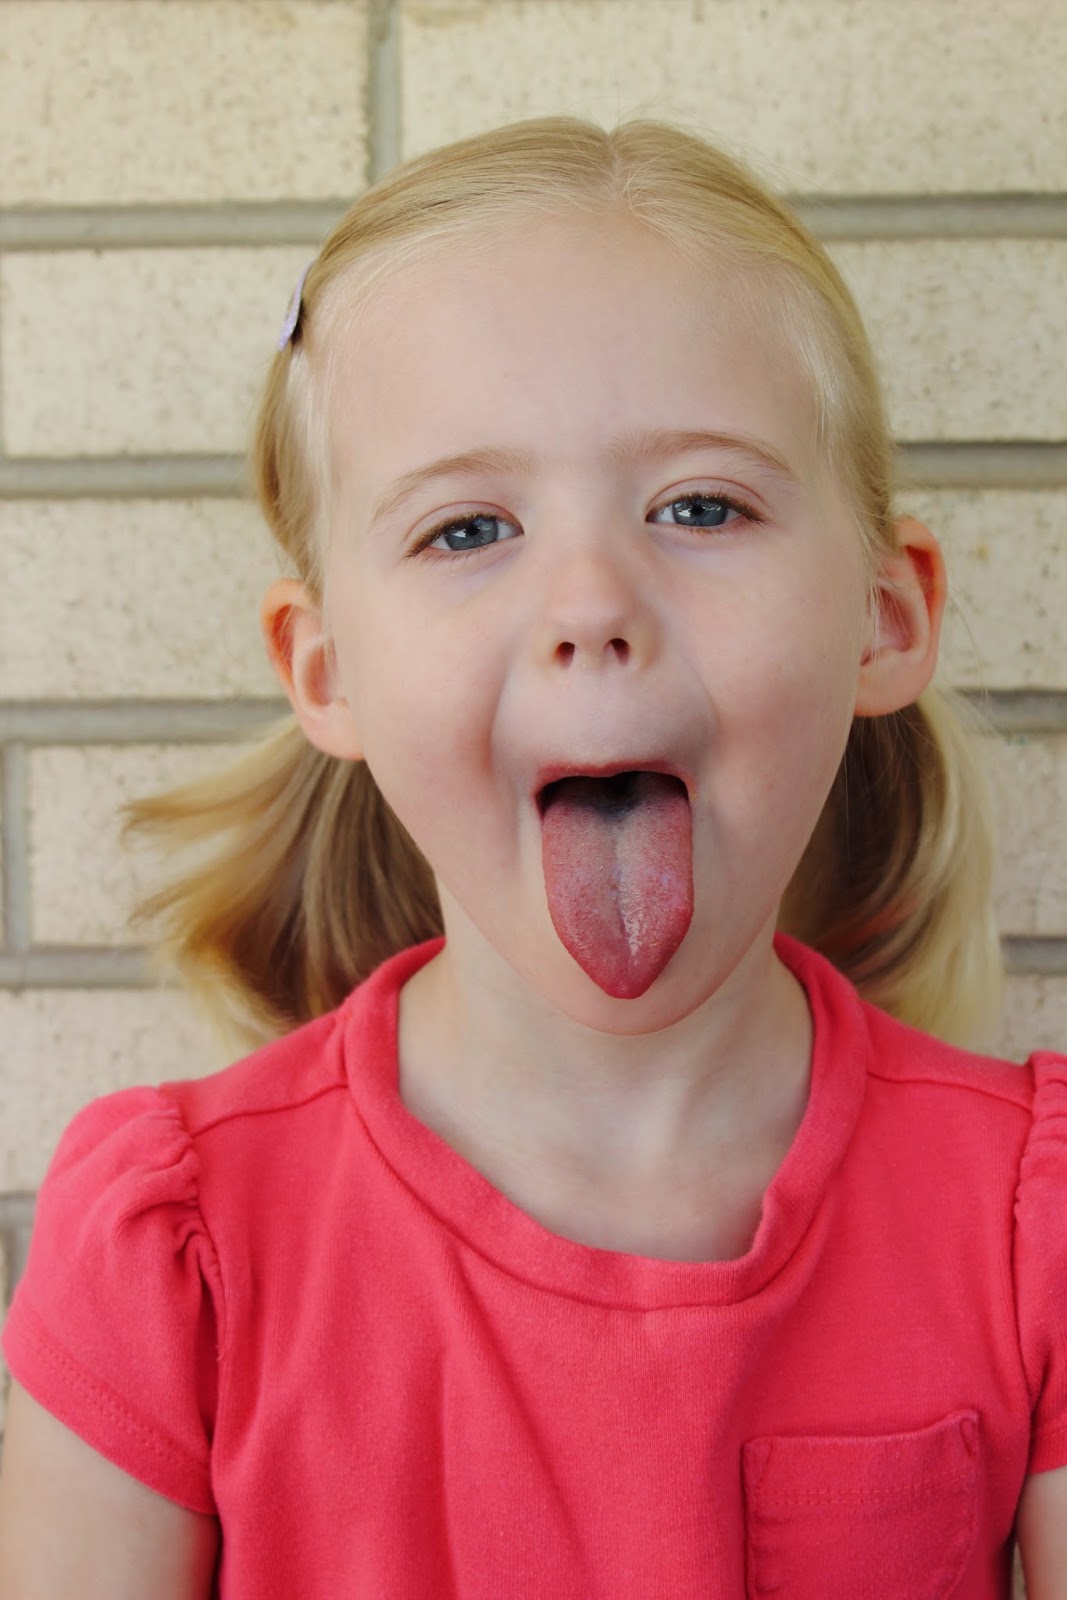 Throated homemade. Дети с открытым ртом. Девочка с открытым ртом. Tongue девочка.